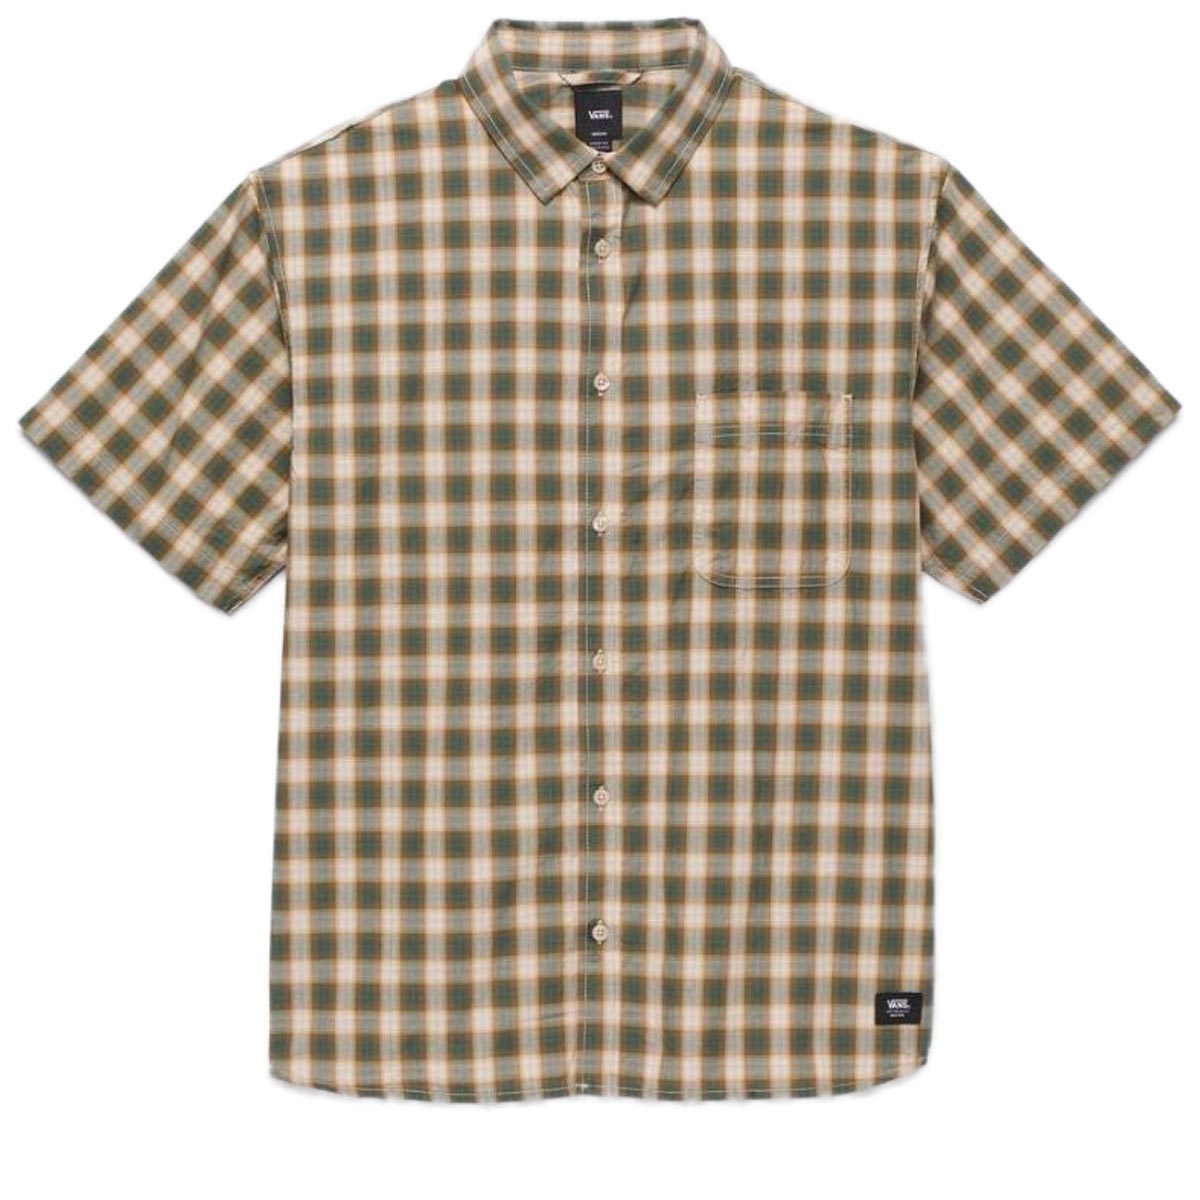 Vans Hadley Woven Shirt - Oatmeal/bistro Green image 4